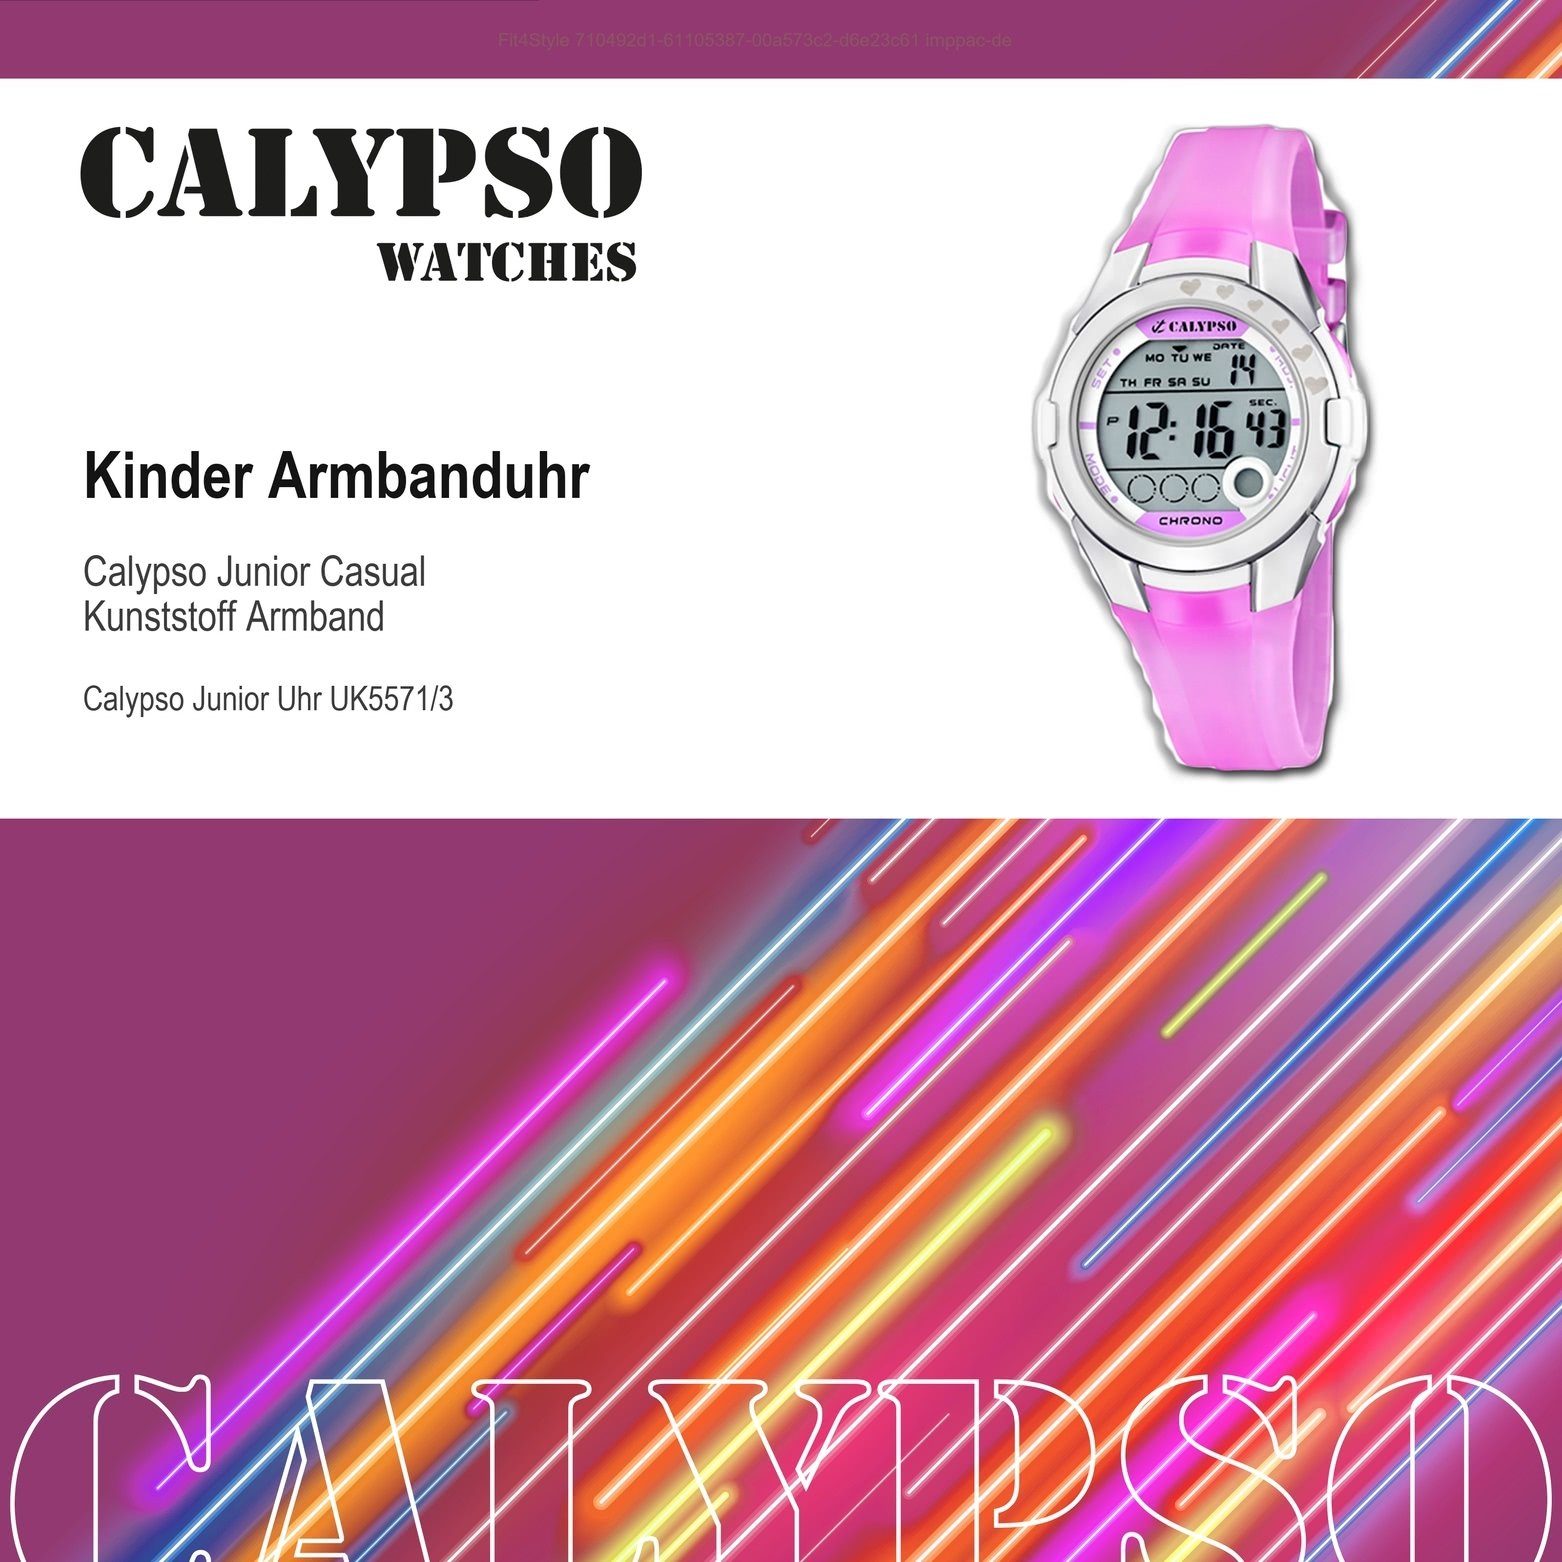 CALYPSO WATCHES Digitaluhr Calypso helllila, Kunststoffband, Armbanduhr Kinder Kinder Casual Kunststoffarmband K5571/3 Uhr rund